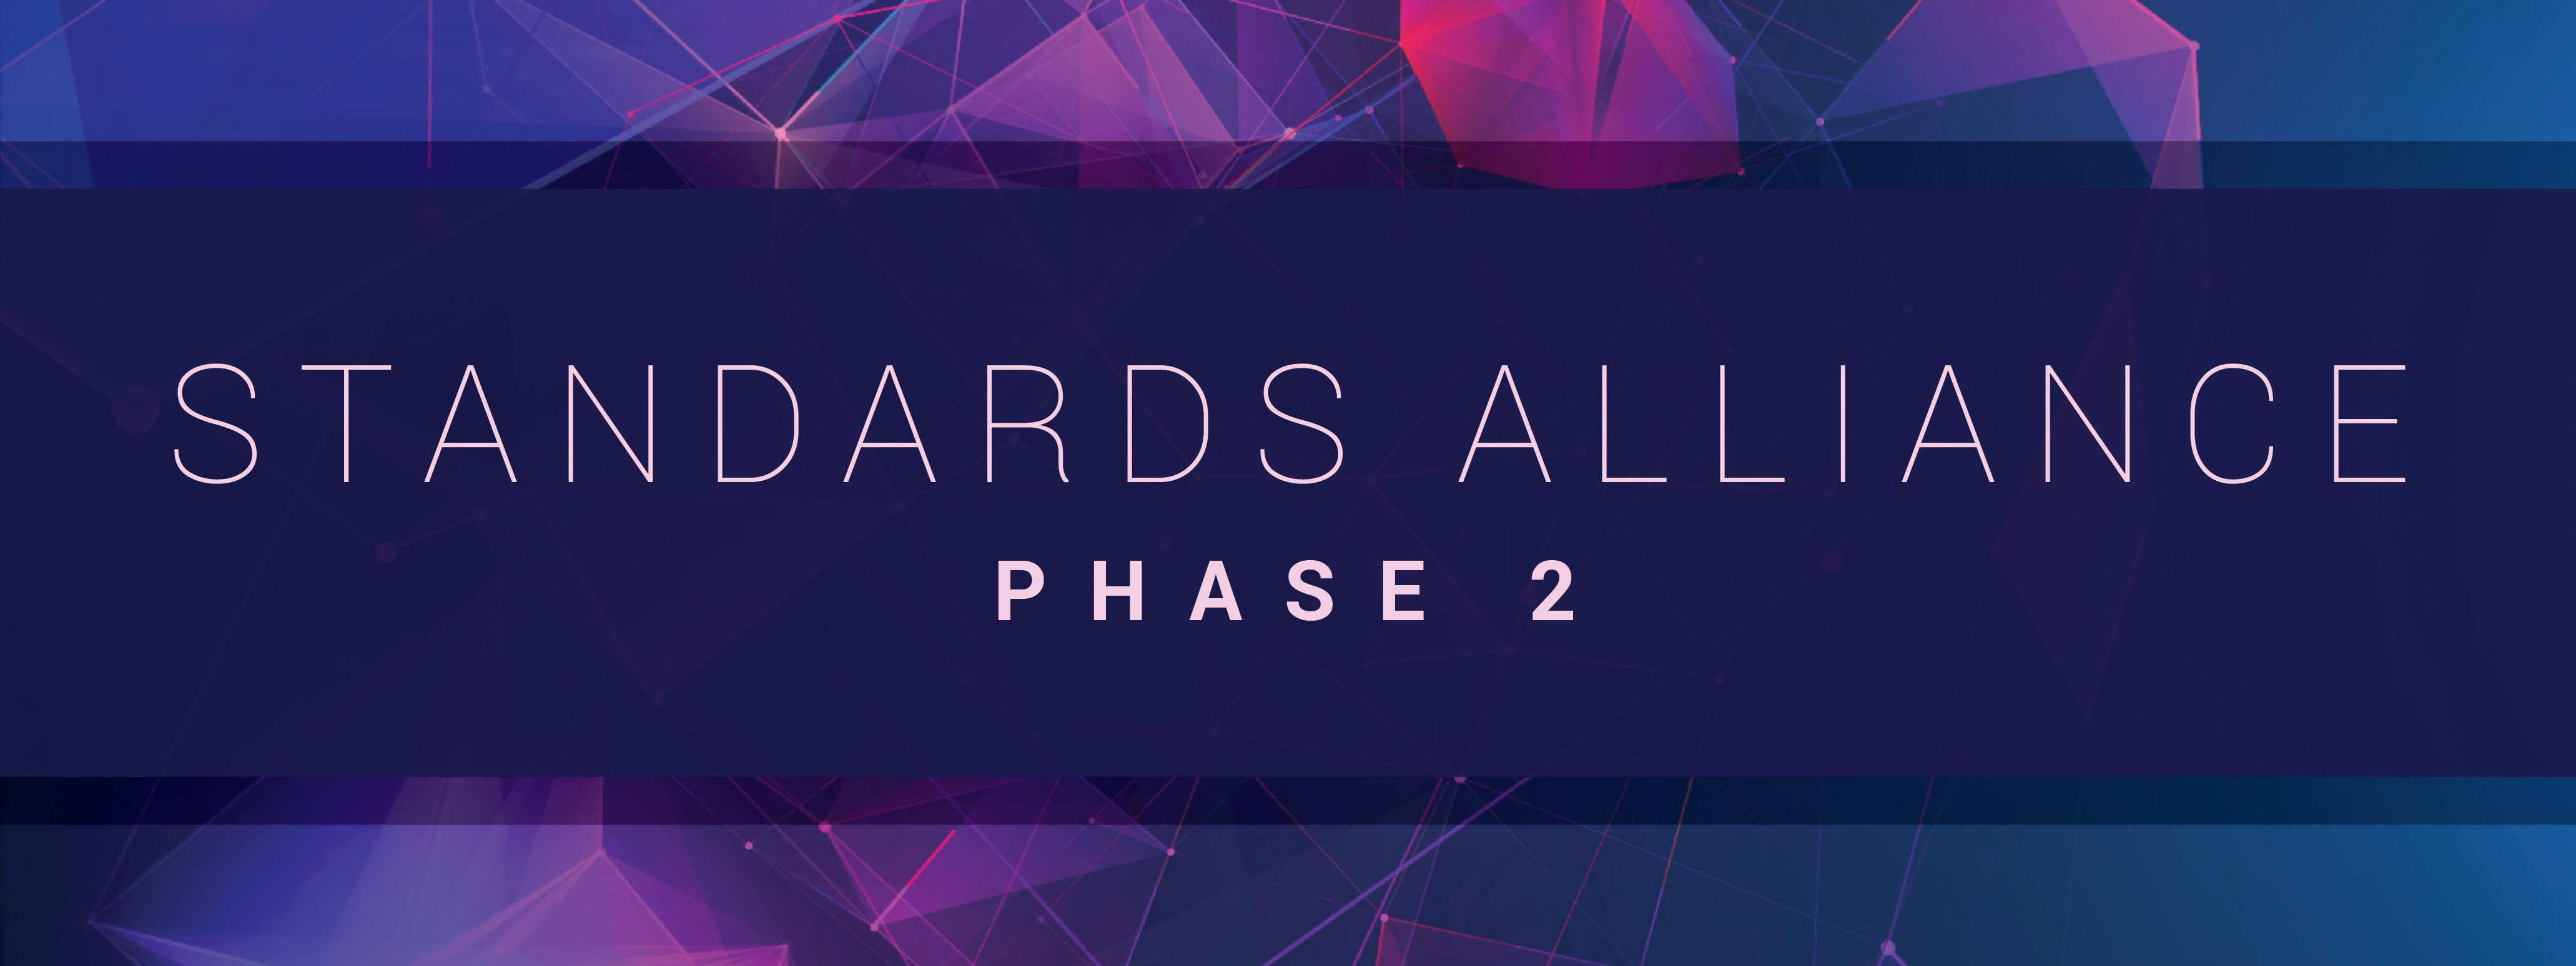 Standards Alliance Phase 2 